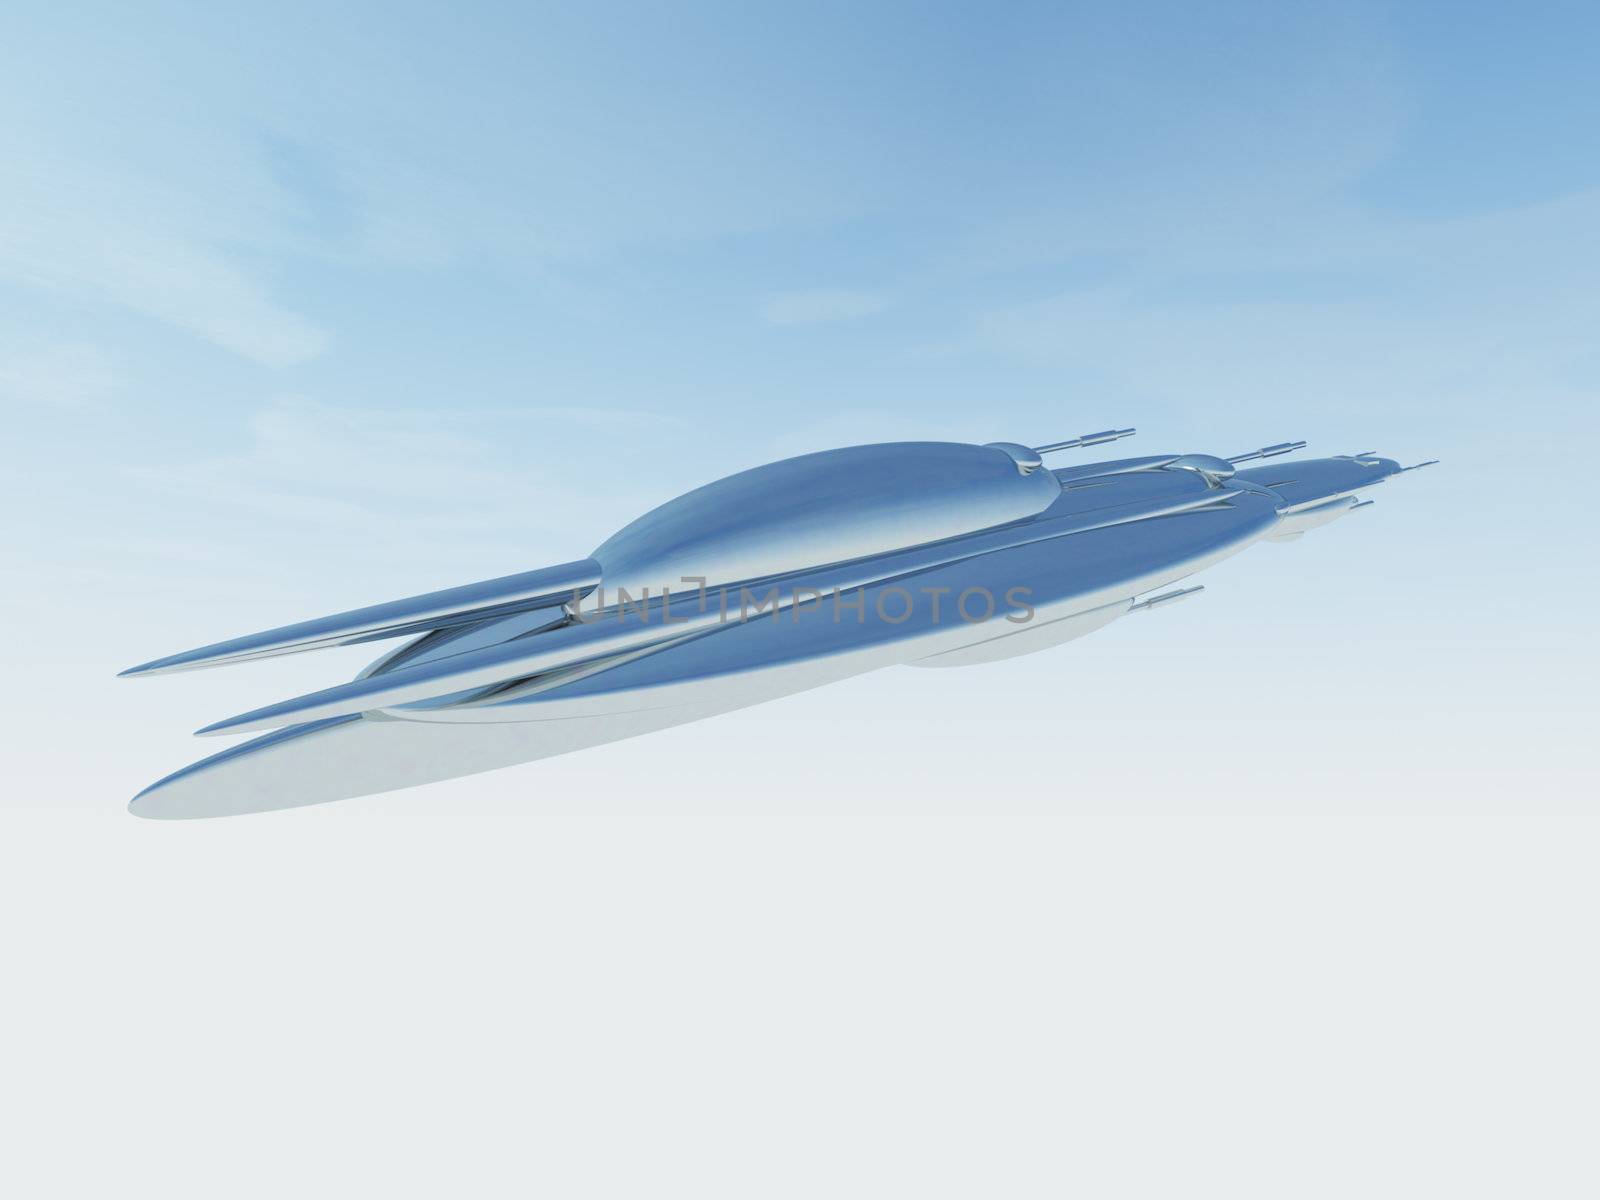 A 3D digital illustration of a UFO spacecraft.